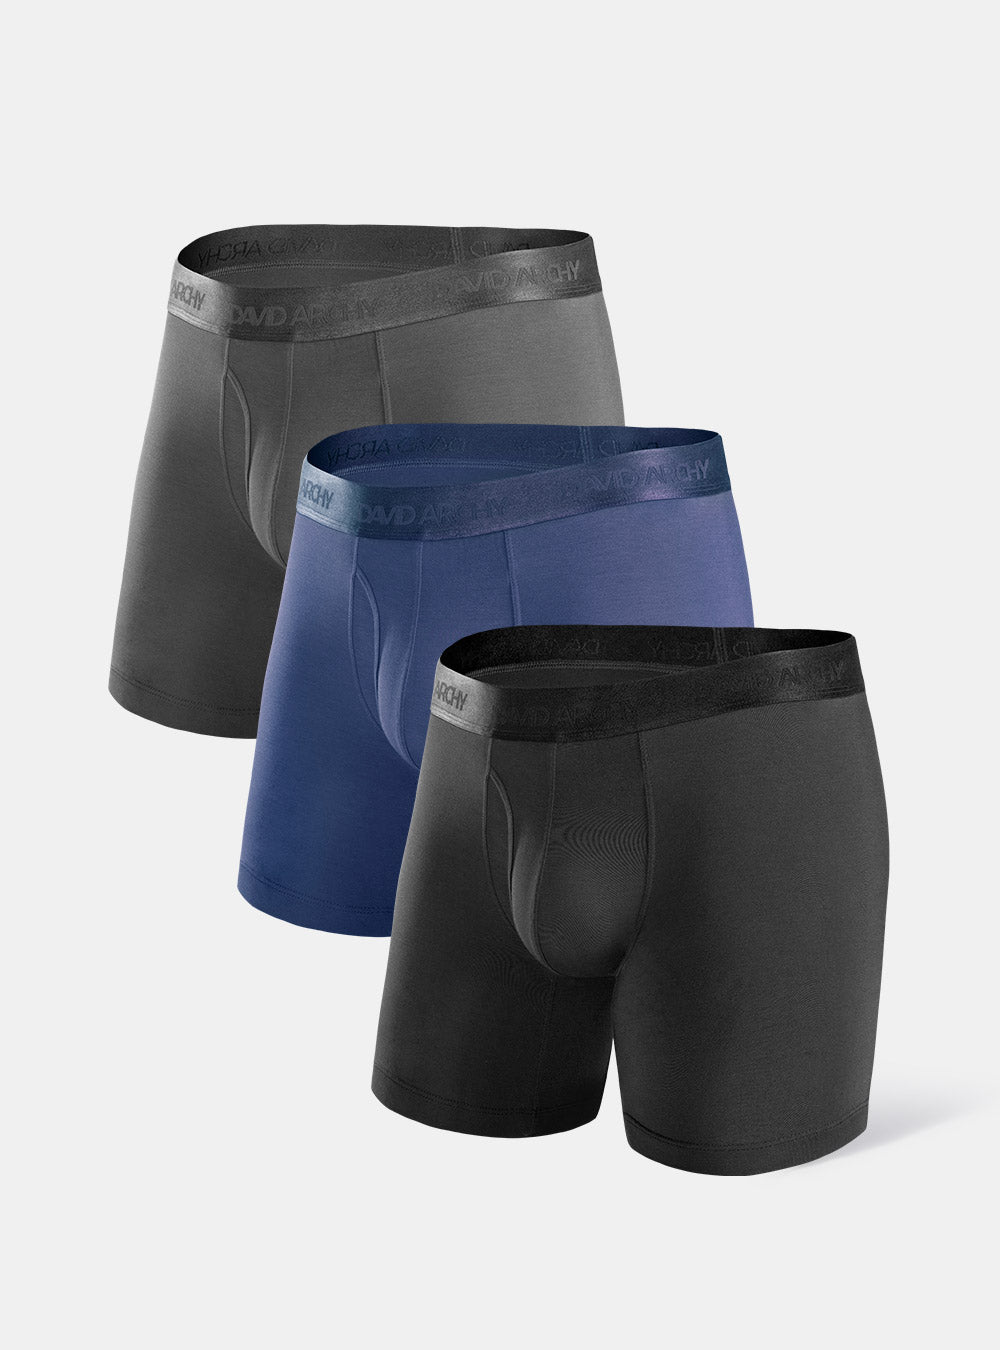 David Archy Clothing on X: David Archy underwear🩲 goes long on comfort.🥳  #davidarchy #davidarchylifestyle #underwear #comfortably #menstyle  #mensstyle #mensfashion #mensunderwear #underwearman   / X